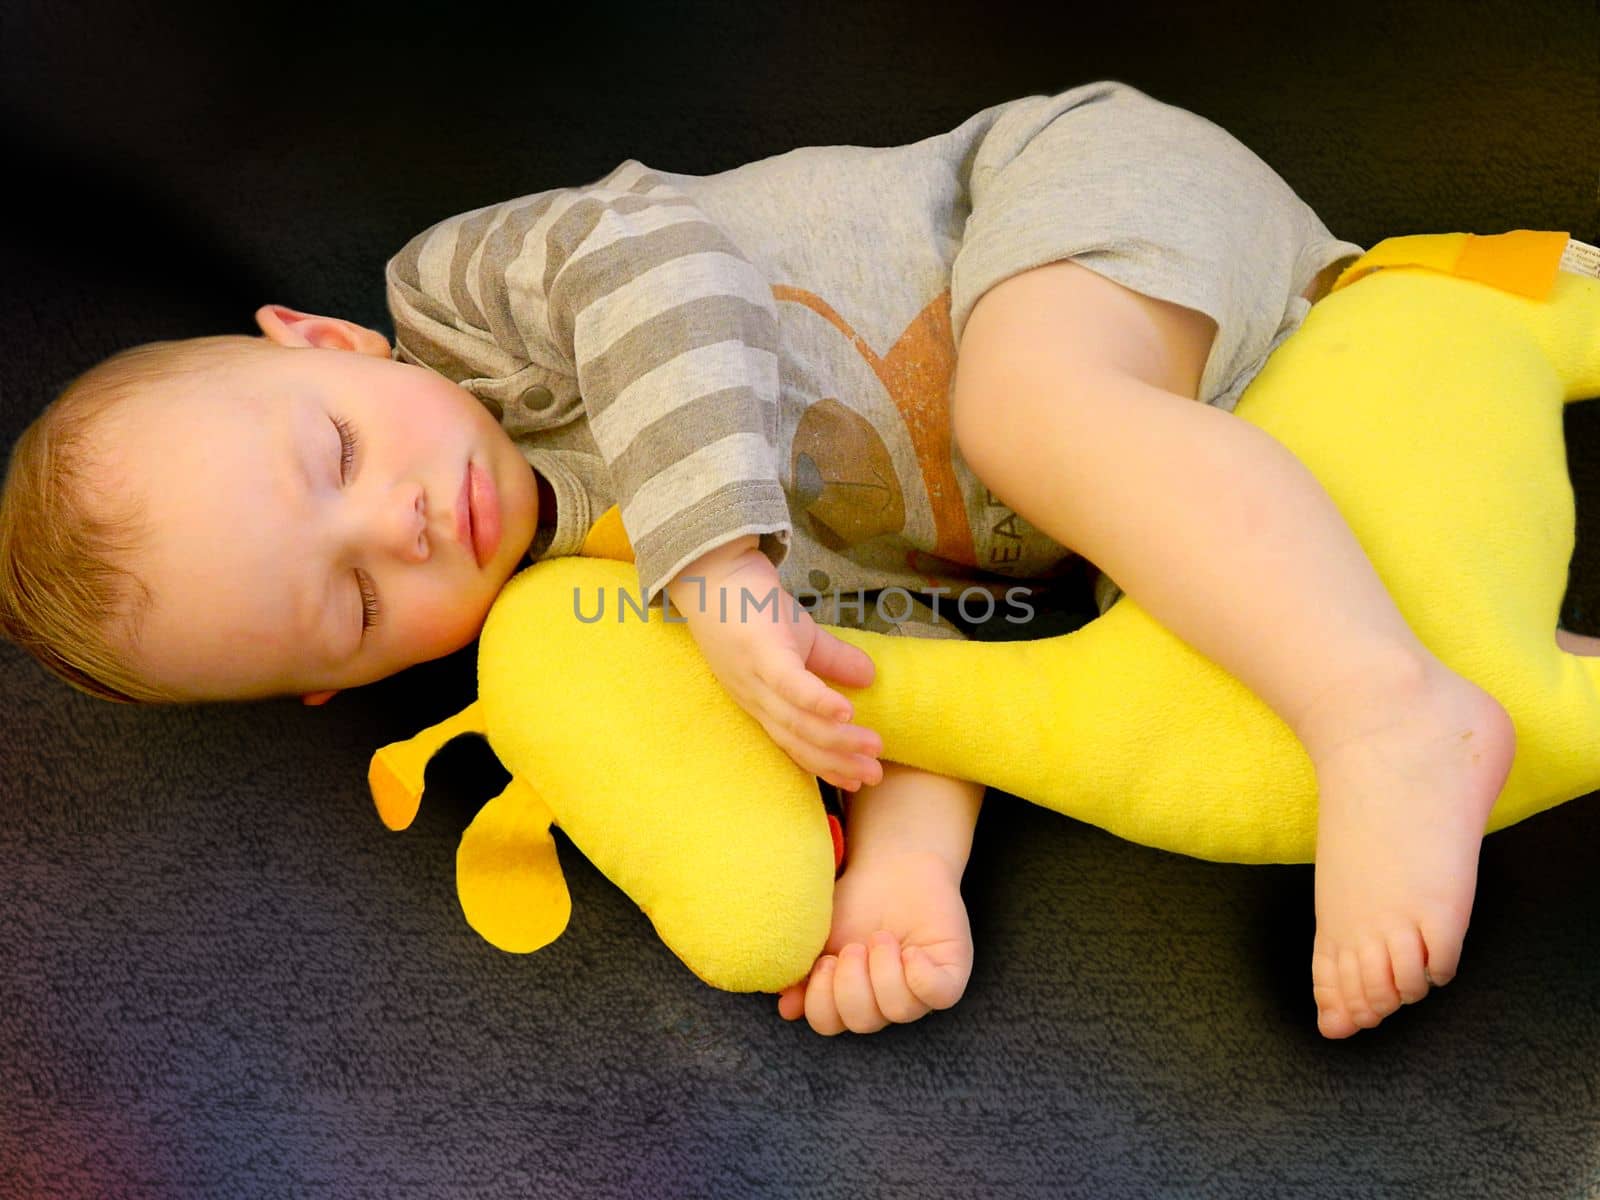 Cute little kid sleeping by milastokerpro